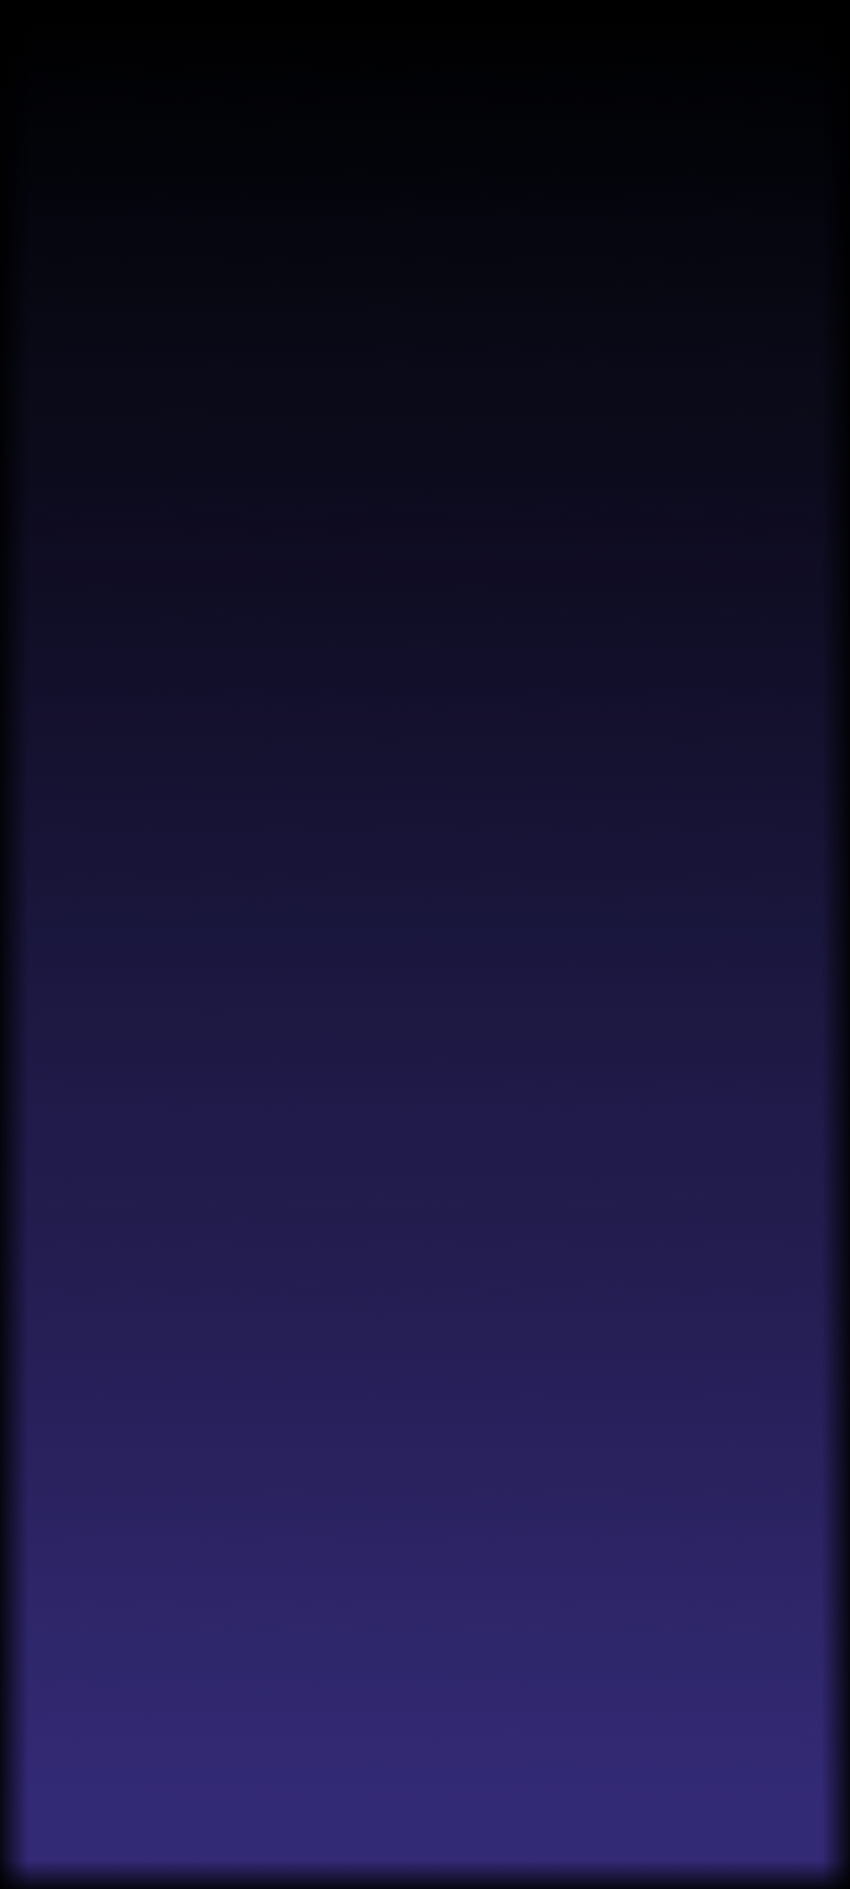 Dark Galaxy S21, 愛, 空, Samsung Galaxy, Google Pixel, 2021, マグマ, シンプル, druffix, 岩, 青, 暗いデザイン, Samsung, Huawei, Edge HD電話の壁紙